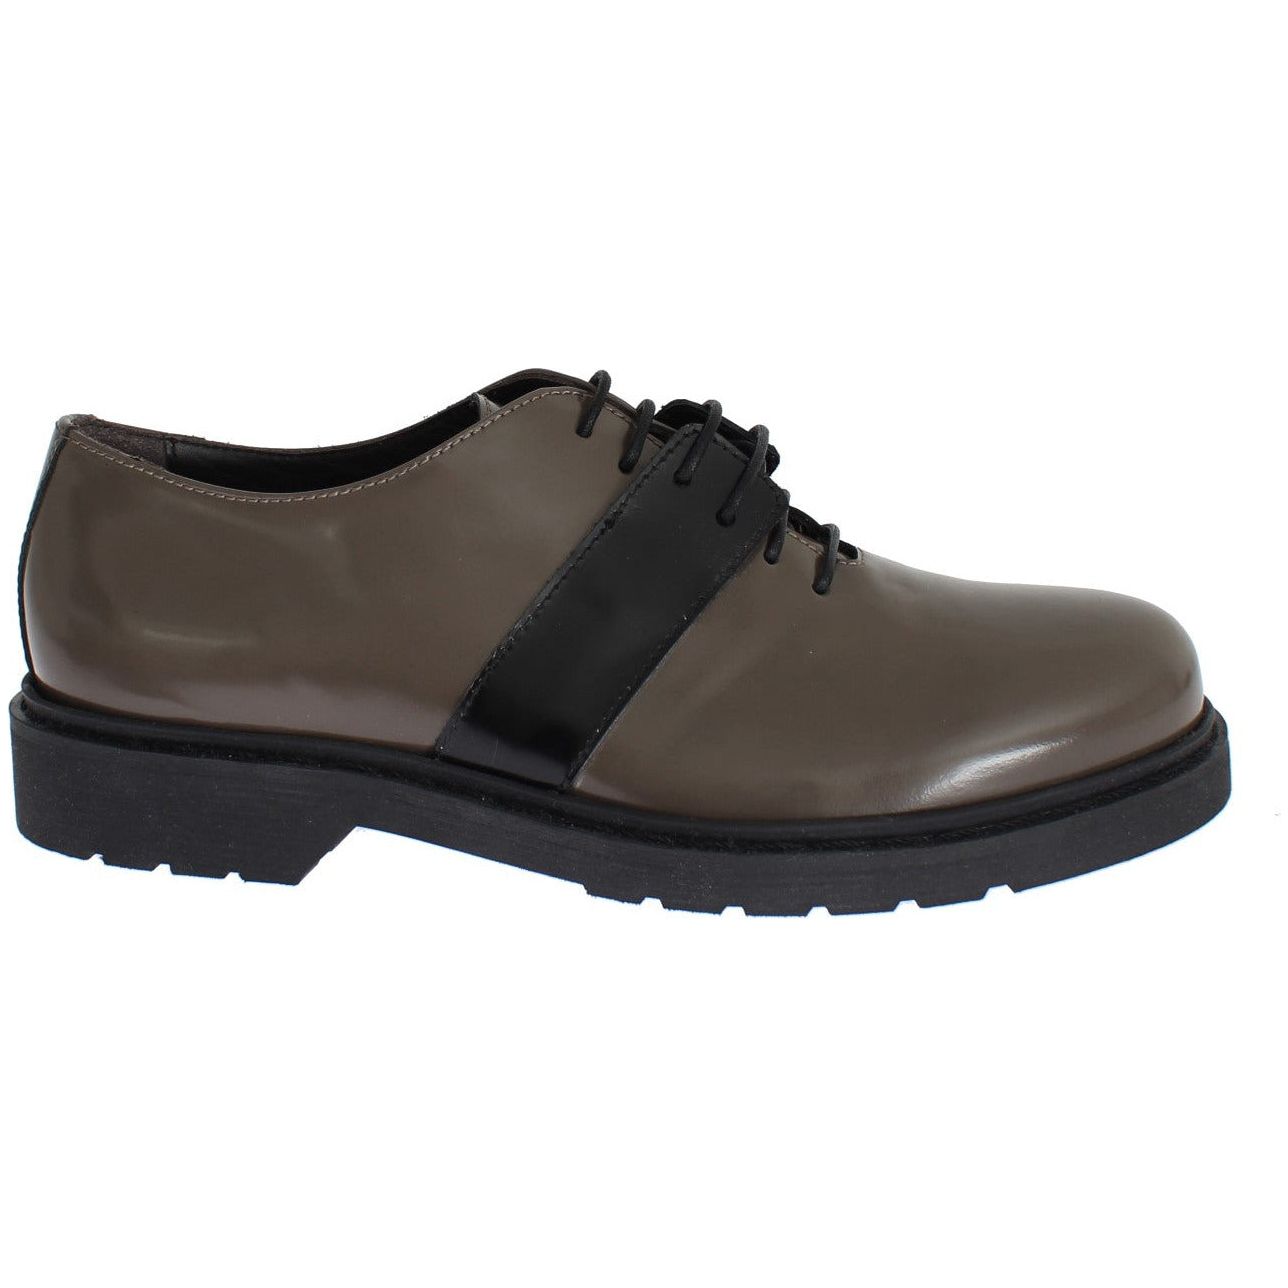 AI_ Elegant Gray Brown Leather Lace-up Shoes gray-brown-leather-laceups-shoes 267999-gray-brown-leather-laceups-shoes_b1092e40-2cdf-4139-88f0-b1e844448a11.jpg